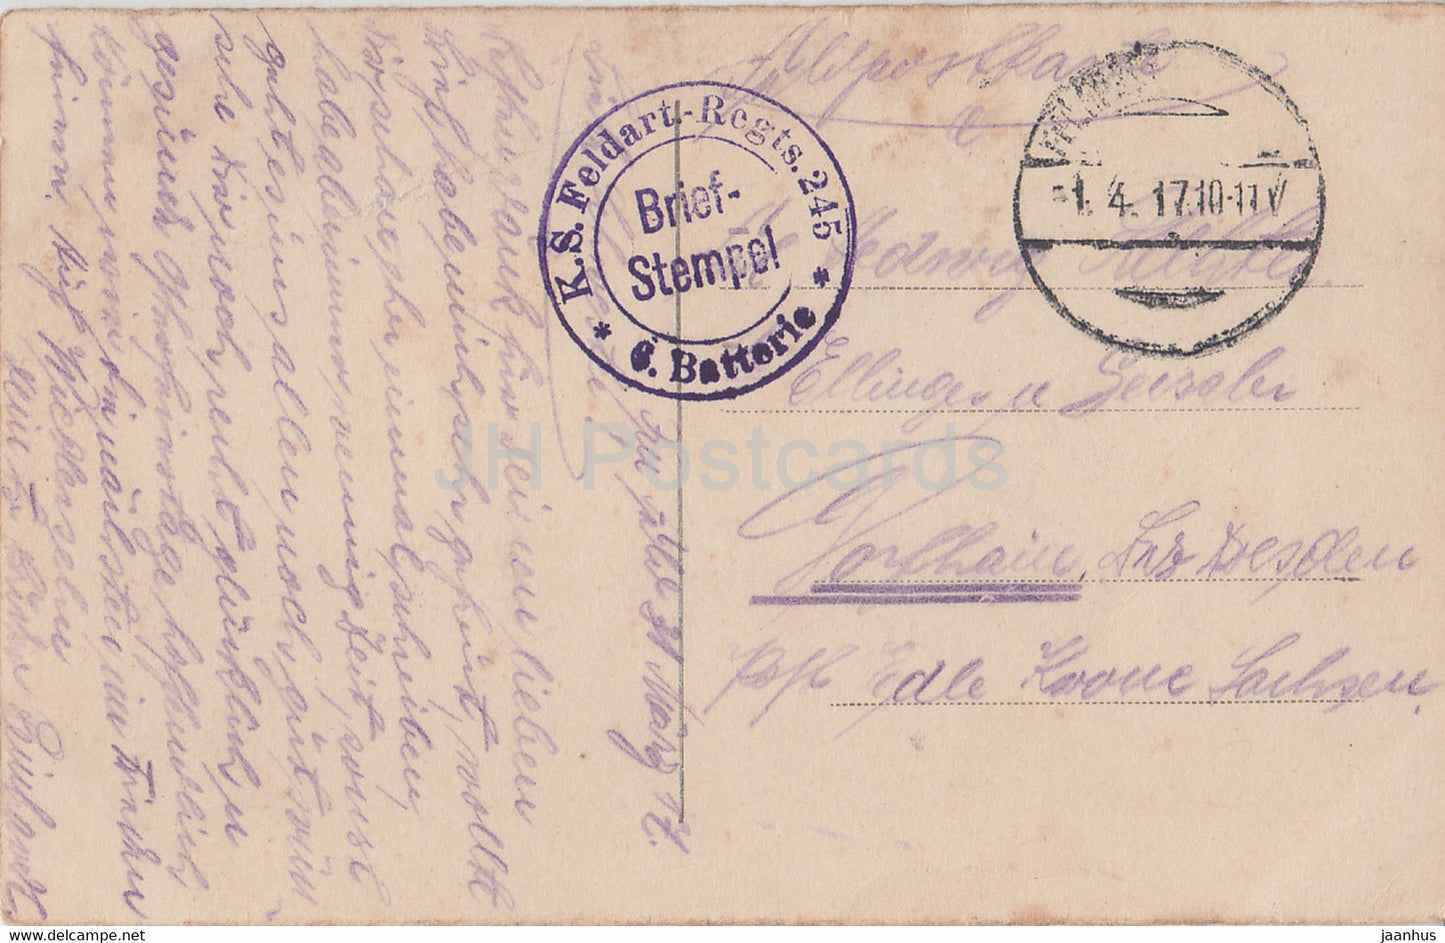 Warschau - Warszawa - Rathaus - Ratusz - town hall - K S Feldart Regts - Feldpost - old postcard - 1917 - Poland - used